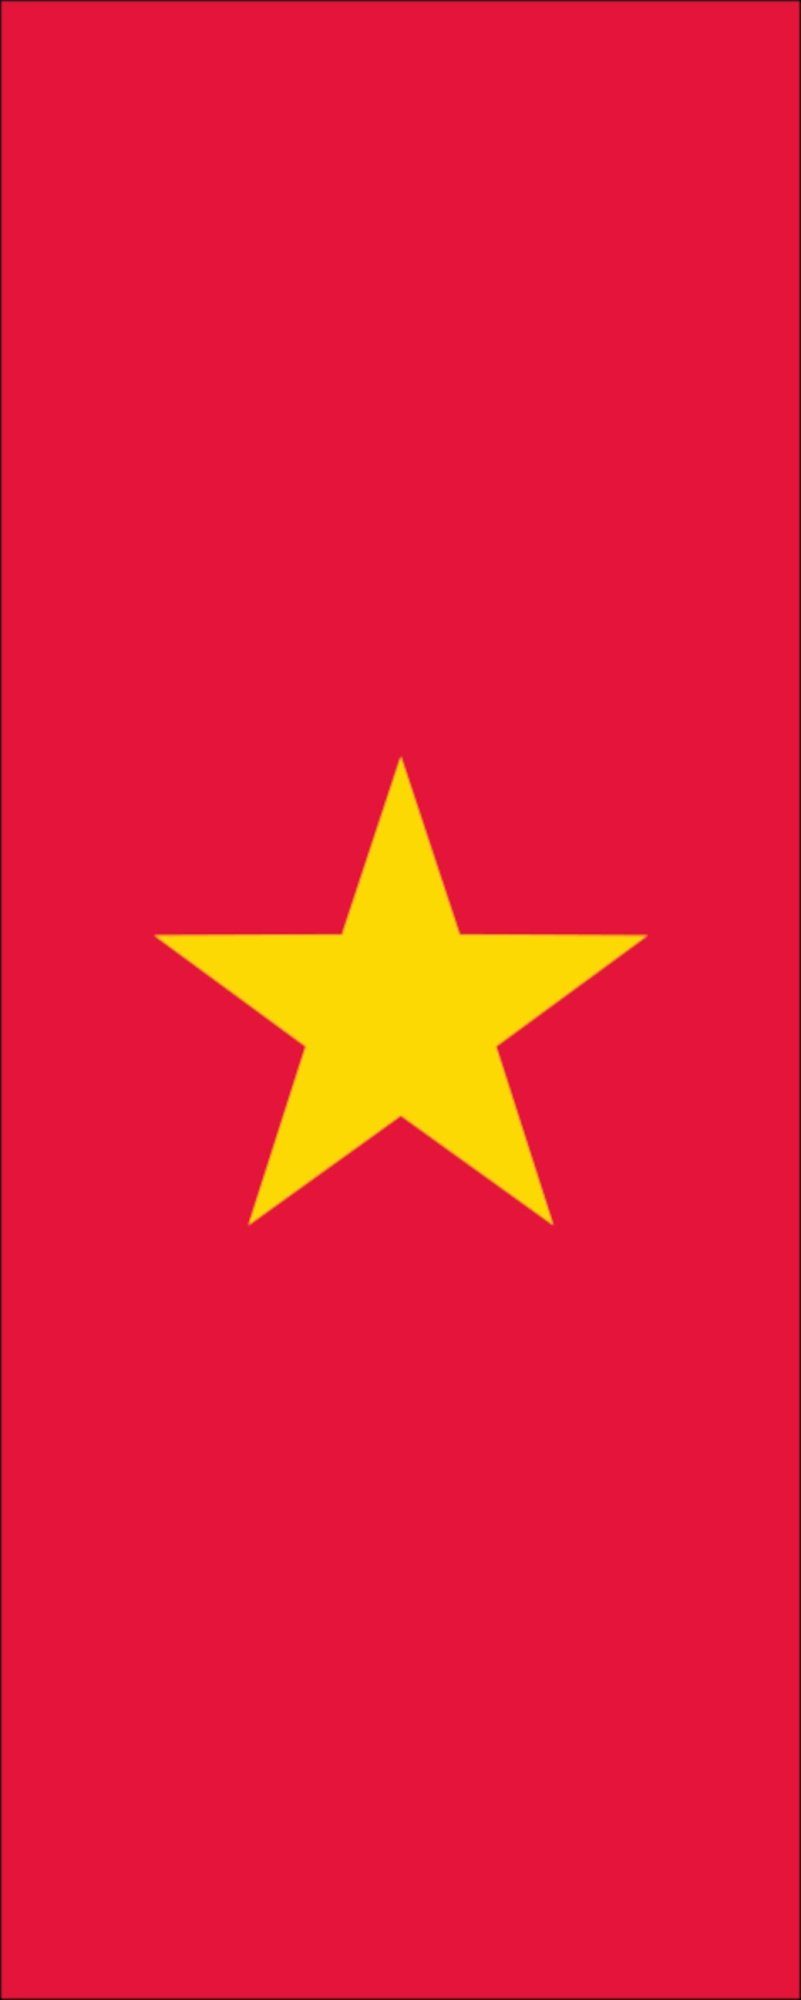 Flagge g/m² Vietnam flaggenmeer 110 Flagge Hochformat